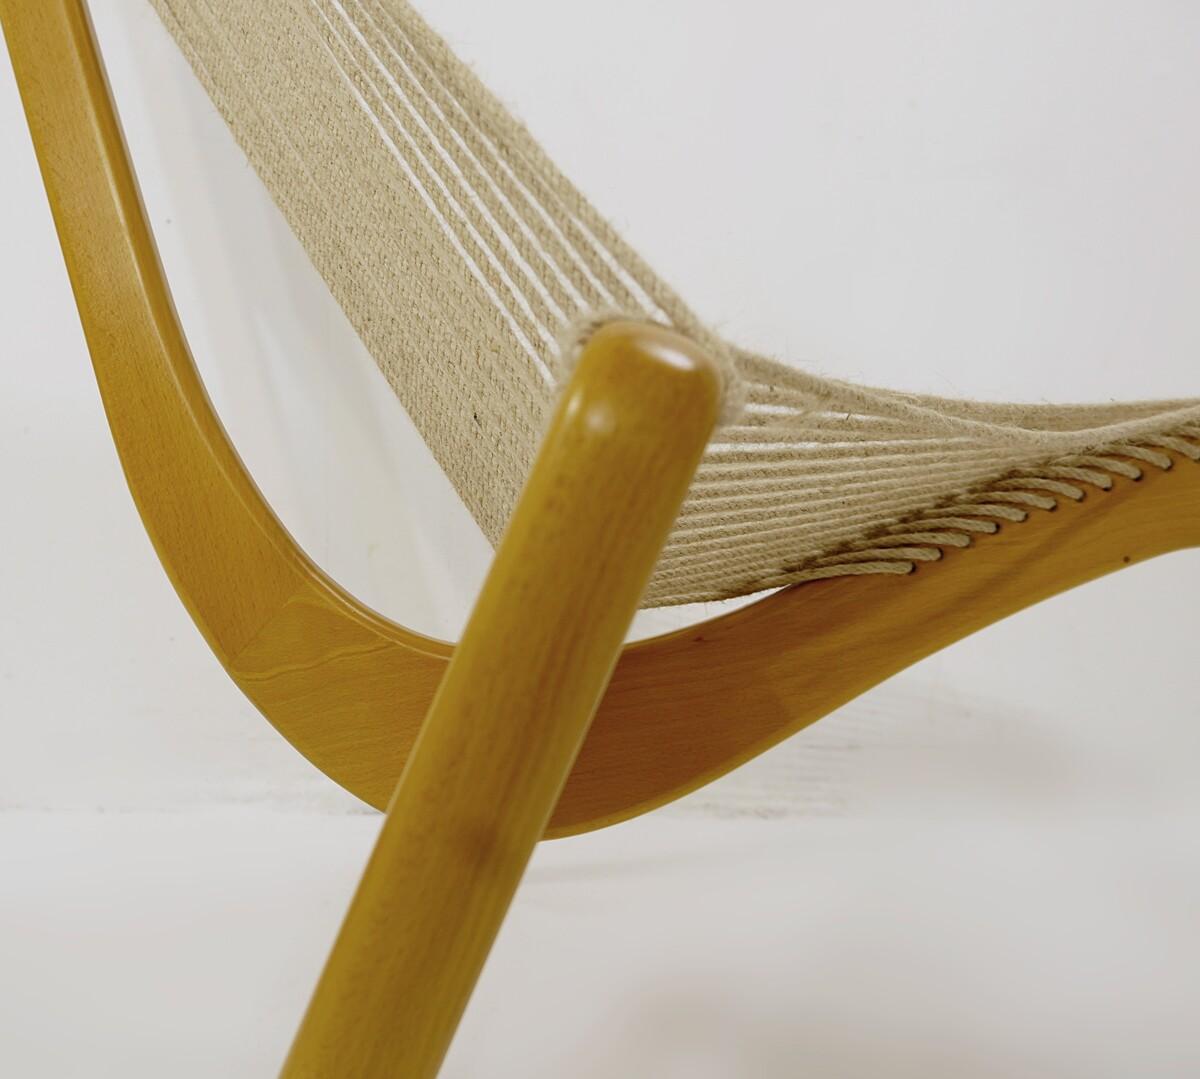 Rope ''harp chair'' by Jørgen Høvelskov and Jorgen Christensen, Denmark, 1963